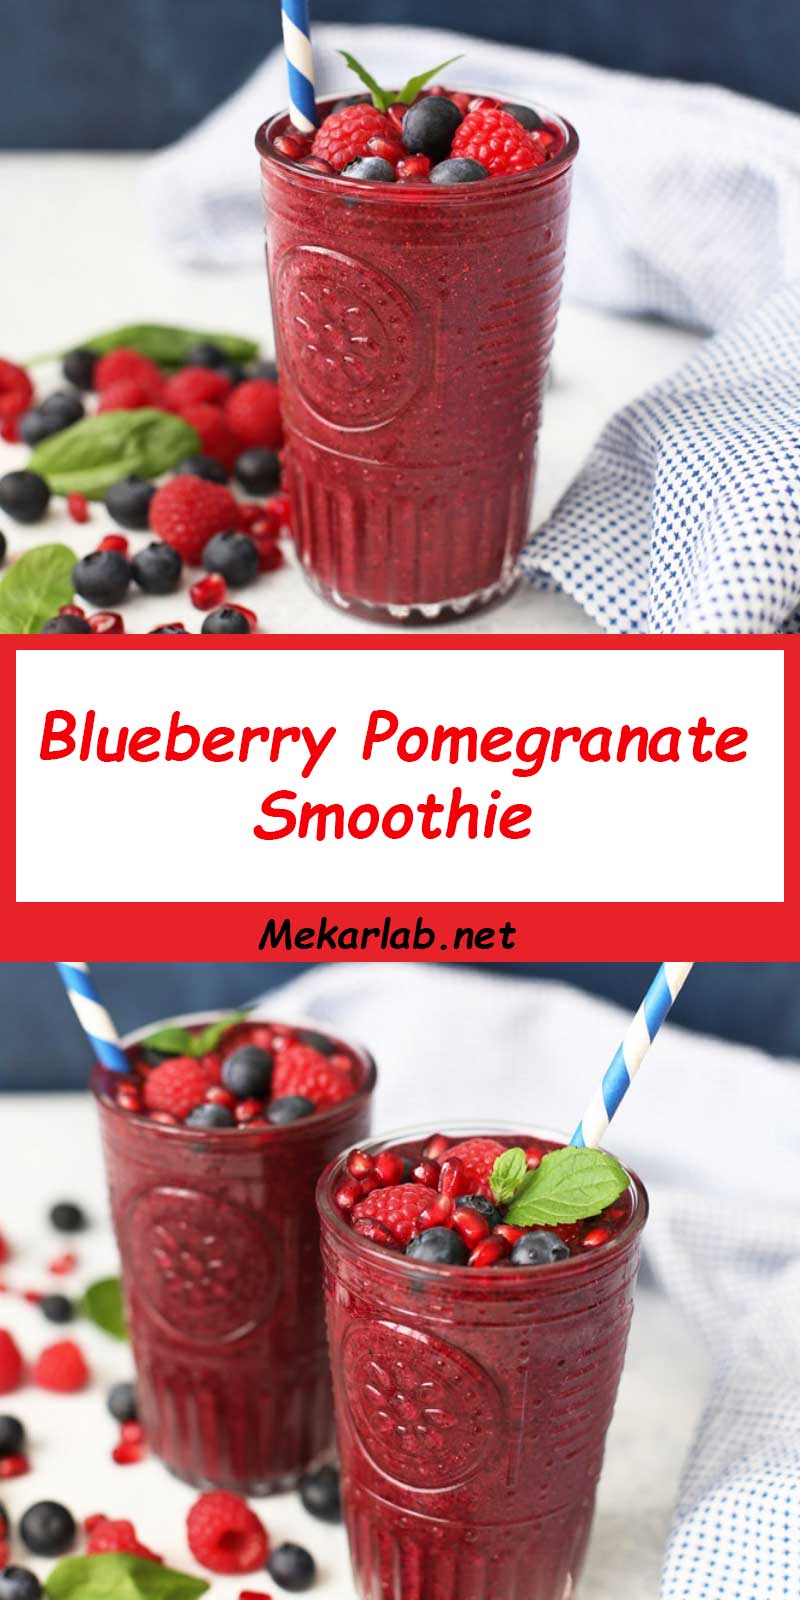 Blueberry Pomegranate Smoothie